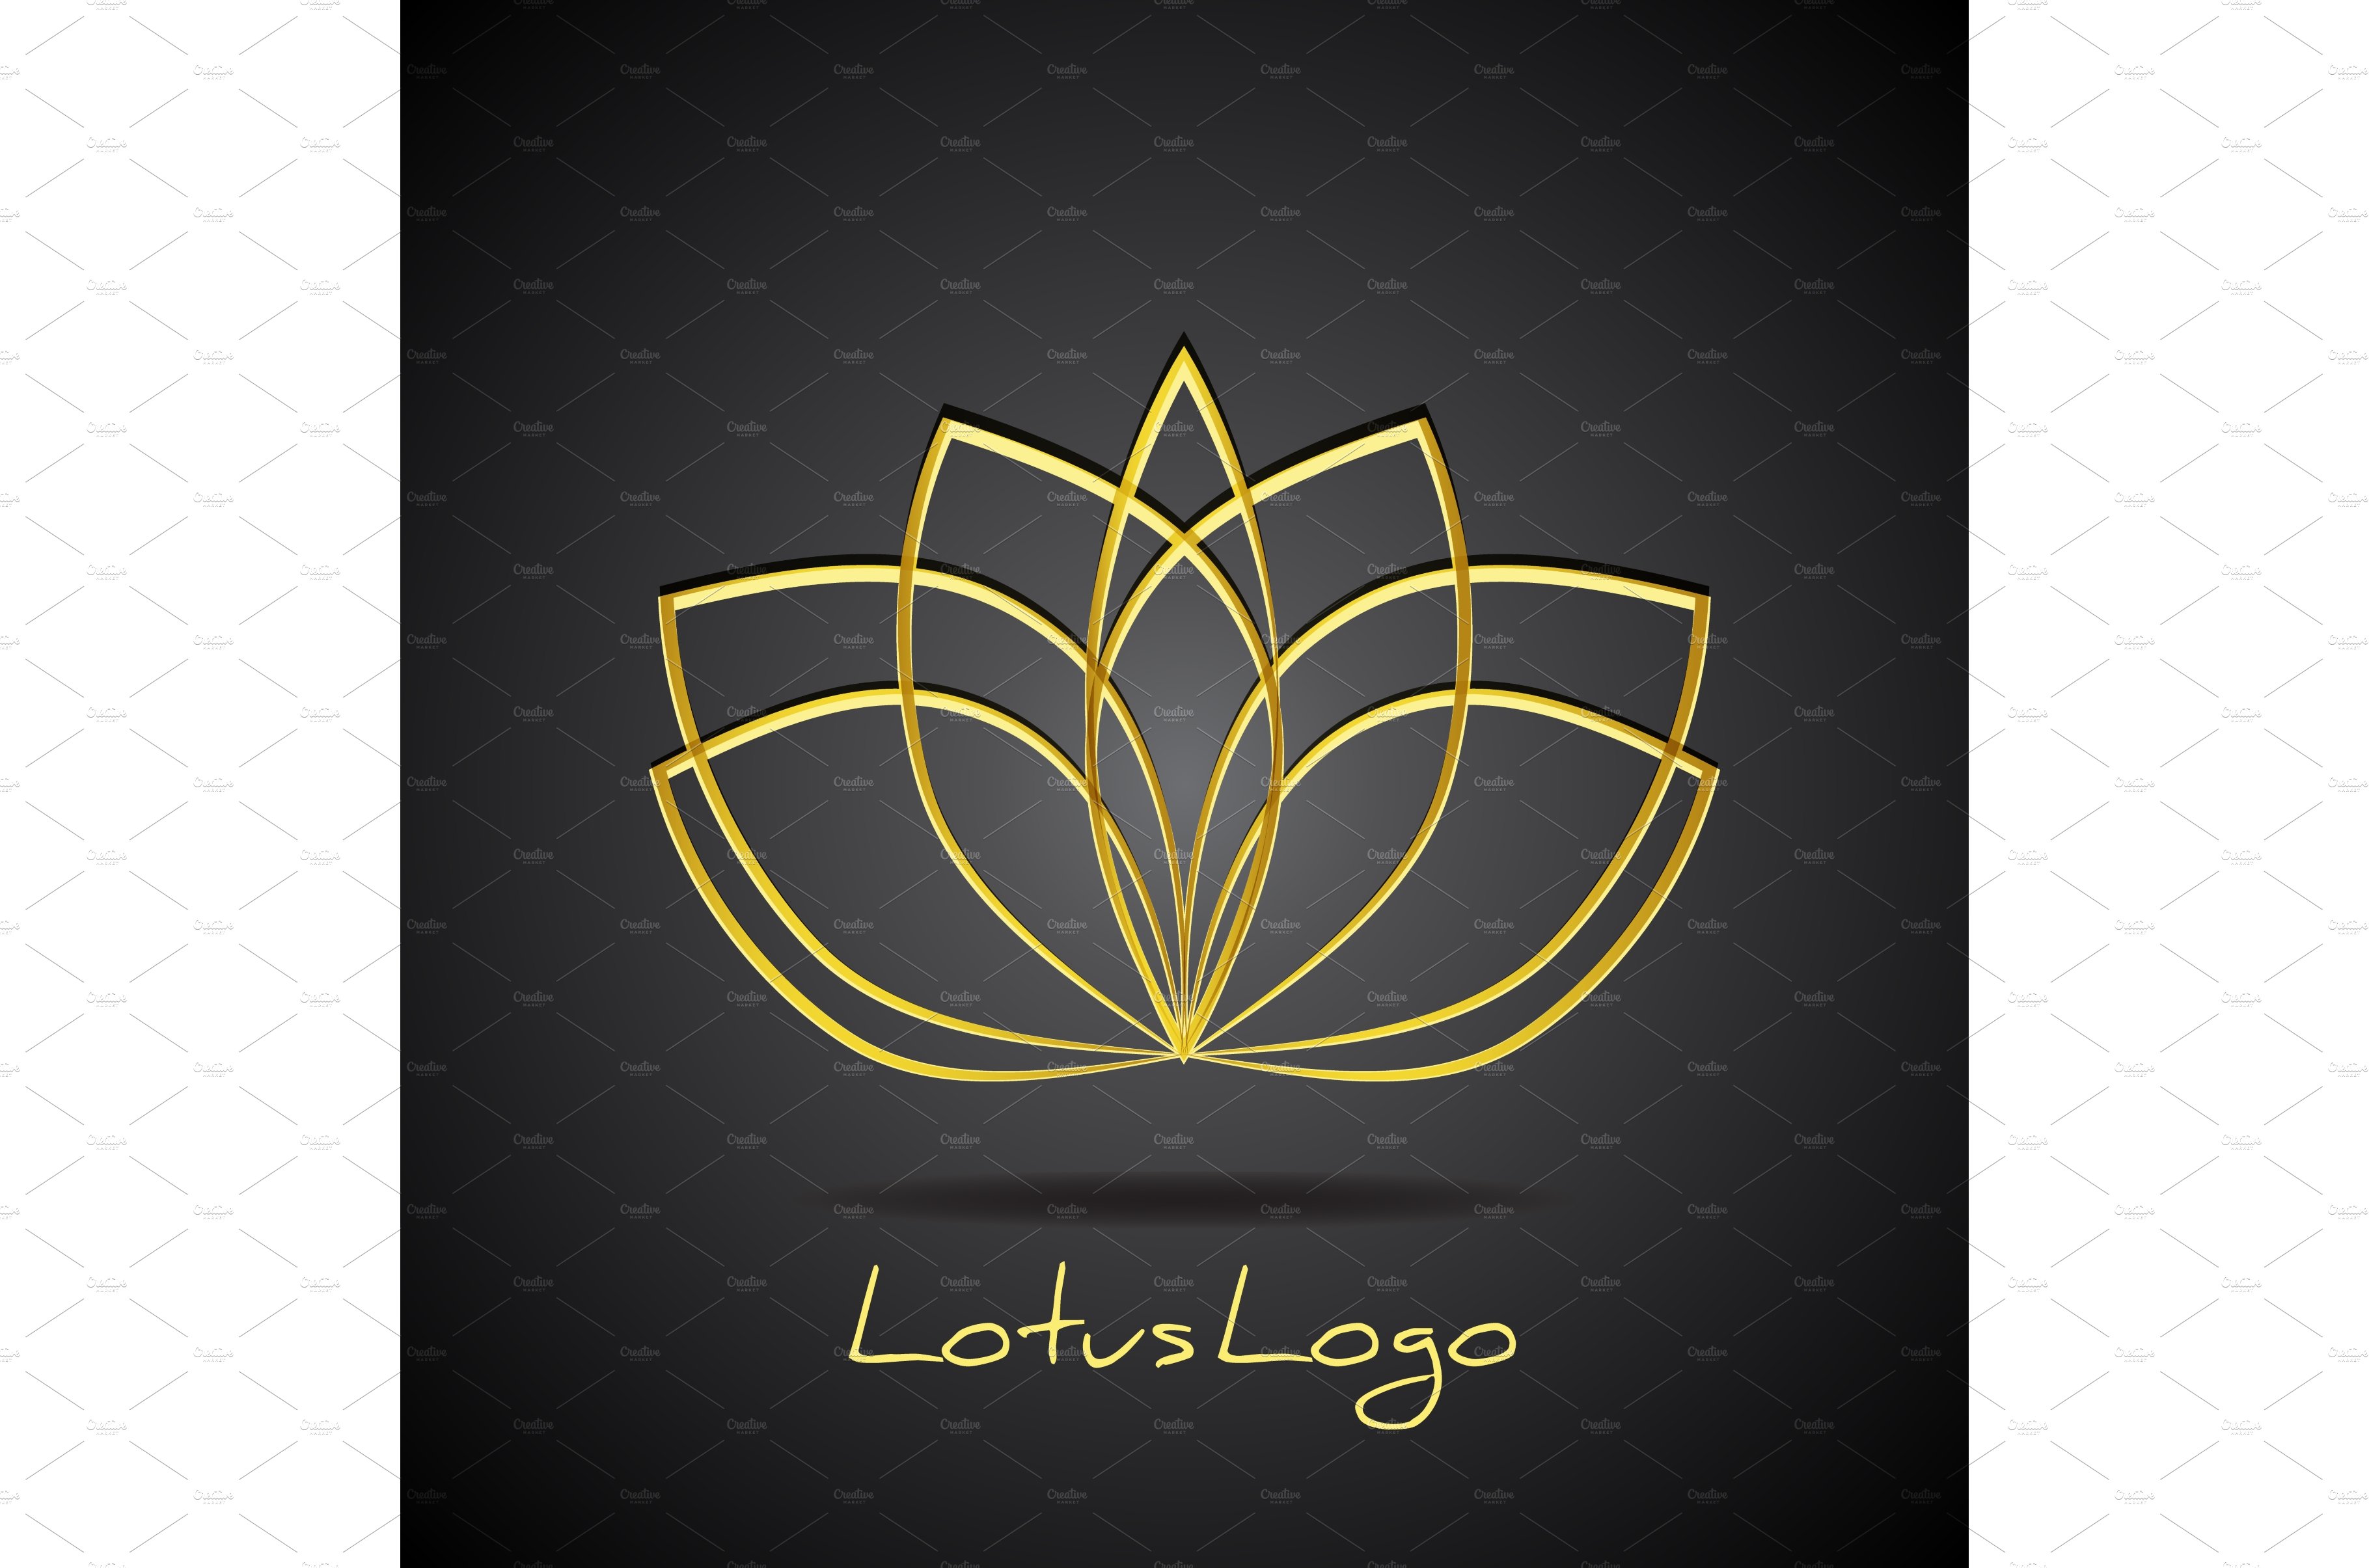 Golden line lotus logo on black cover image.